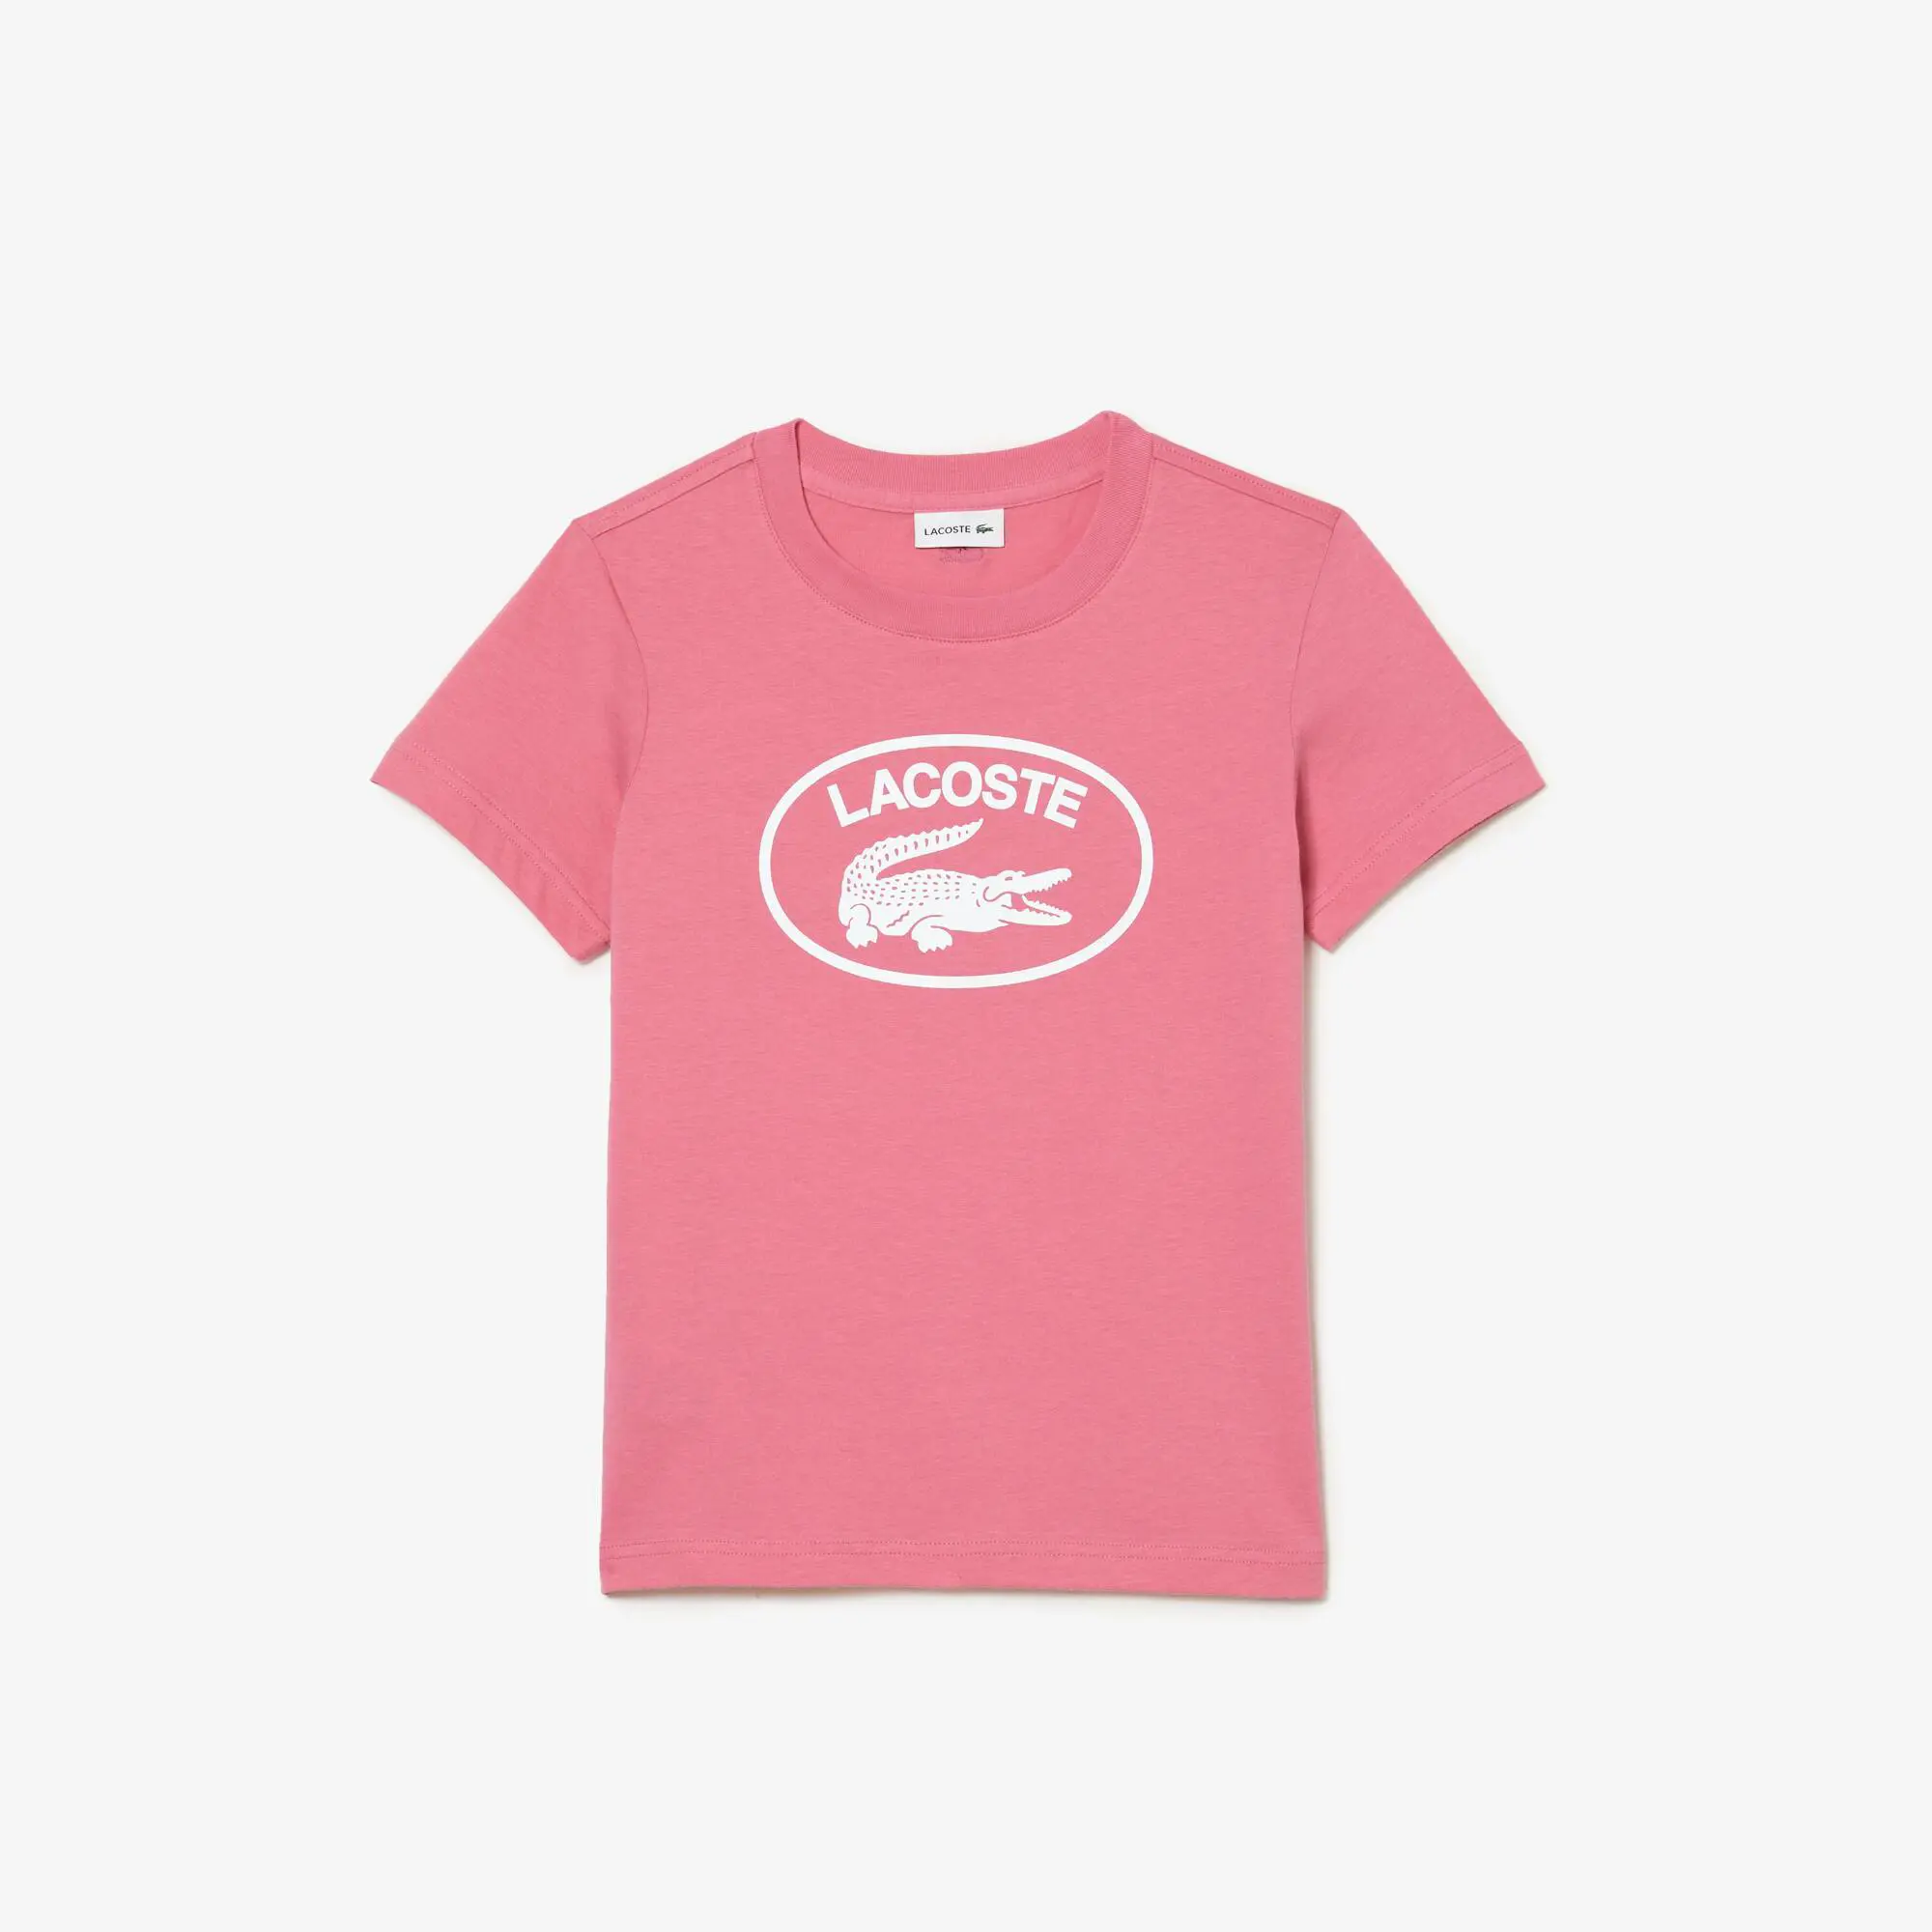 Lacoste Kids' Lacoste Contrast Branded Cotton Jersey T-shirt. 2